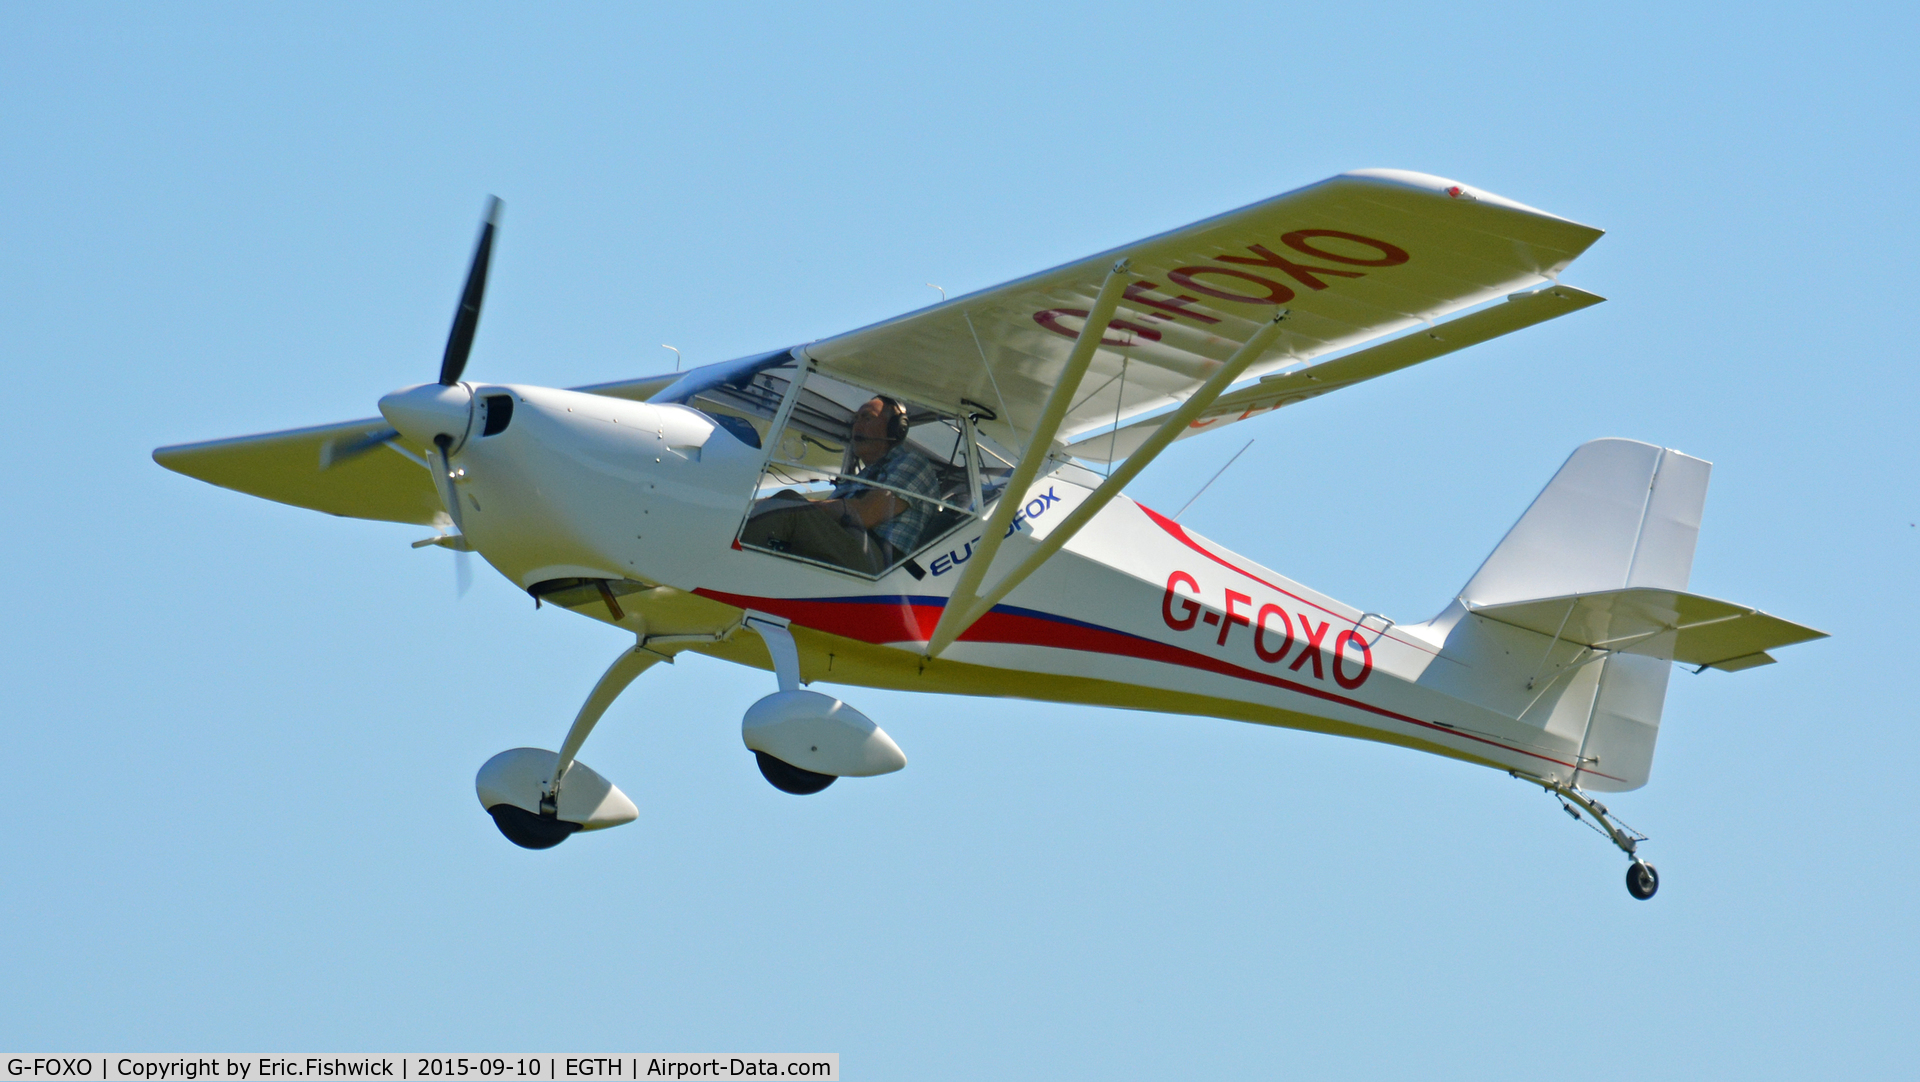 G-FOXO, 2014 Aeropro Eurofox 912(S) C/N LAA 376-15165, 43. G-FOXO departing The Shuttleworth Collection, Old Warden.